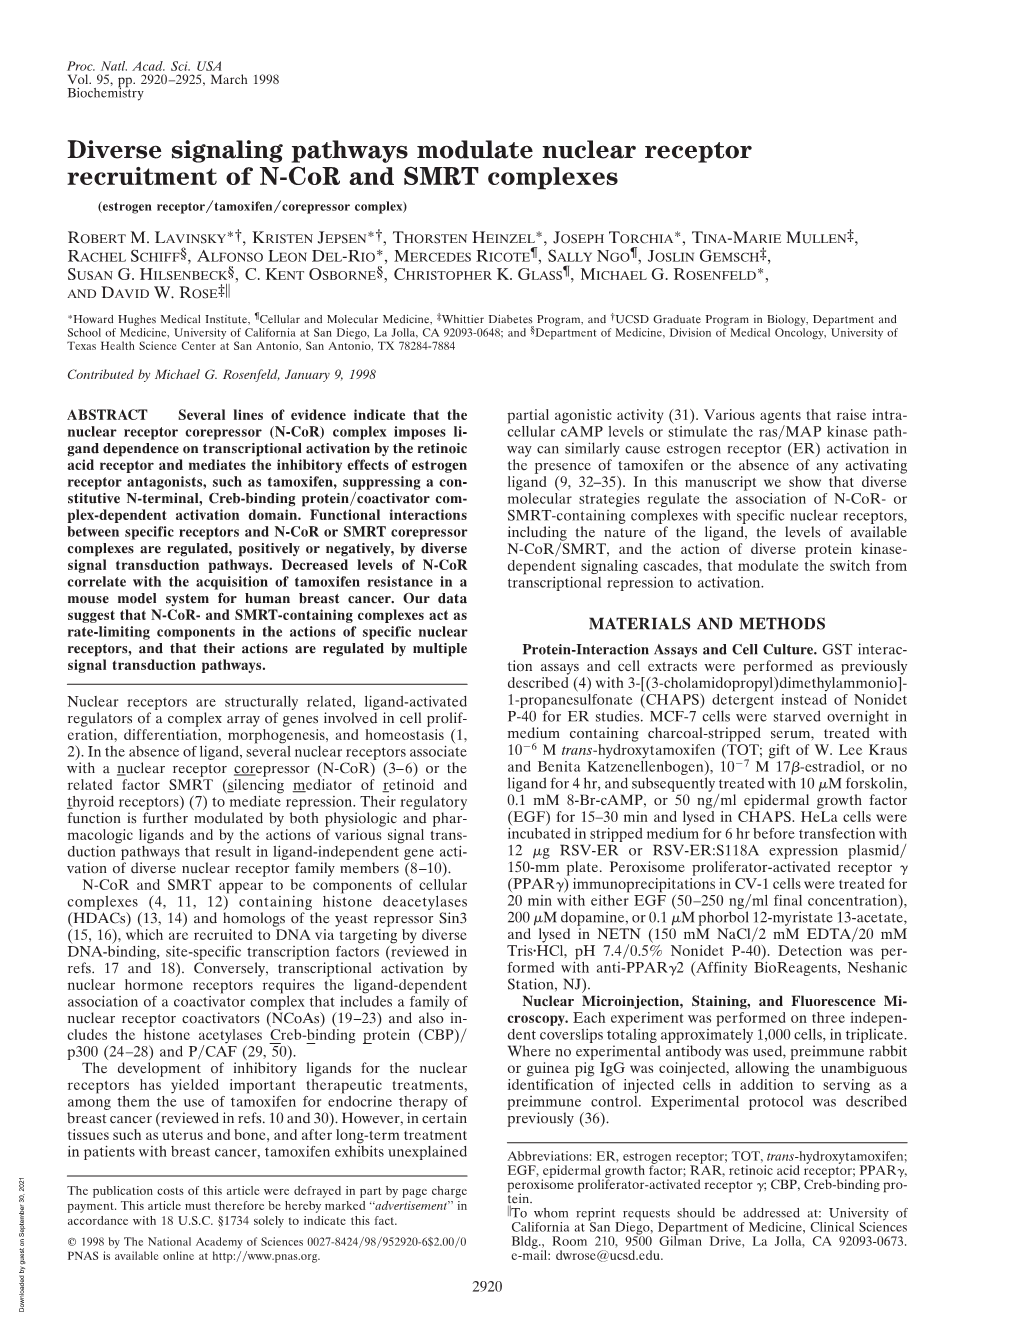 Diverse Signaling Pathways Modulate Nuclear Receptor Recruitment of N-Cor and SMRT Complexes (Estrogen Receptor͞tamoxifen͞corepressor Complex)